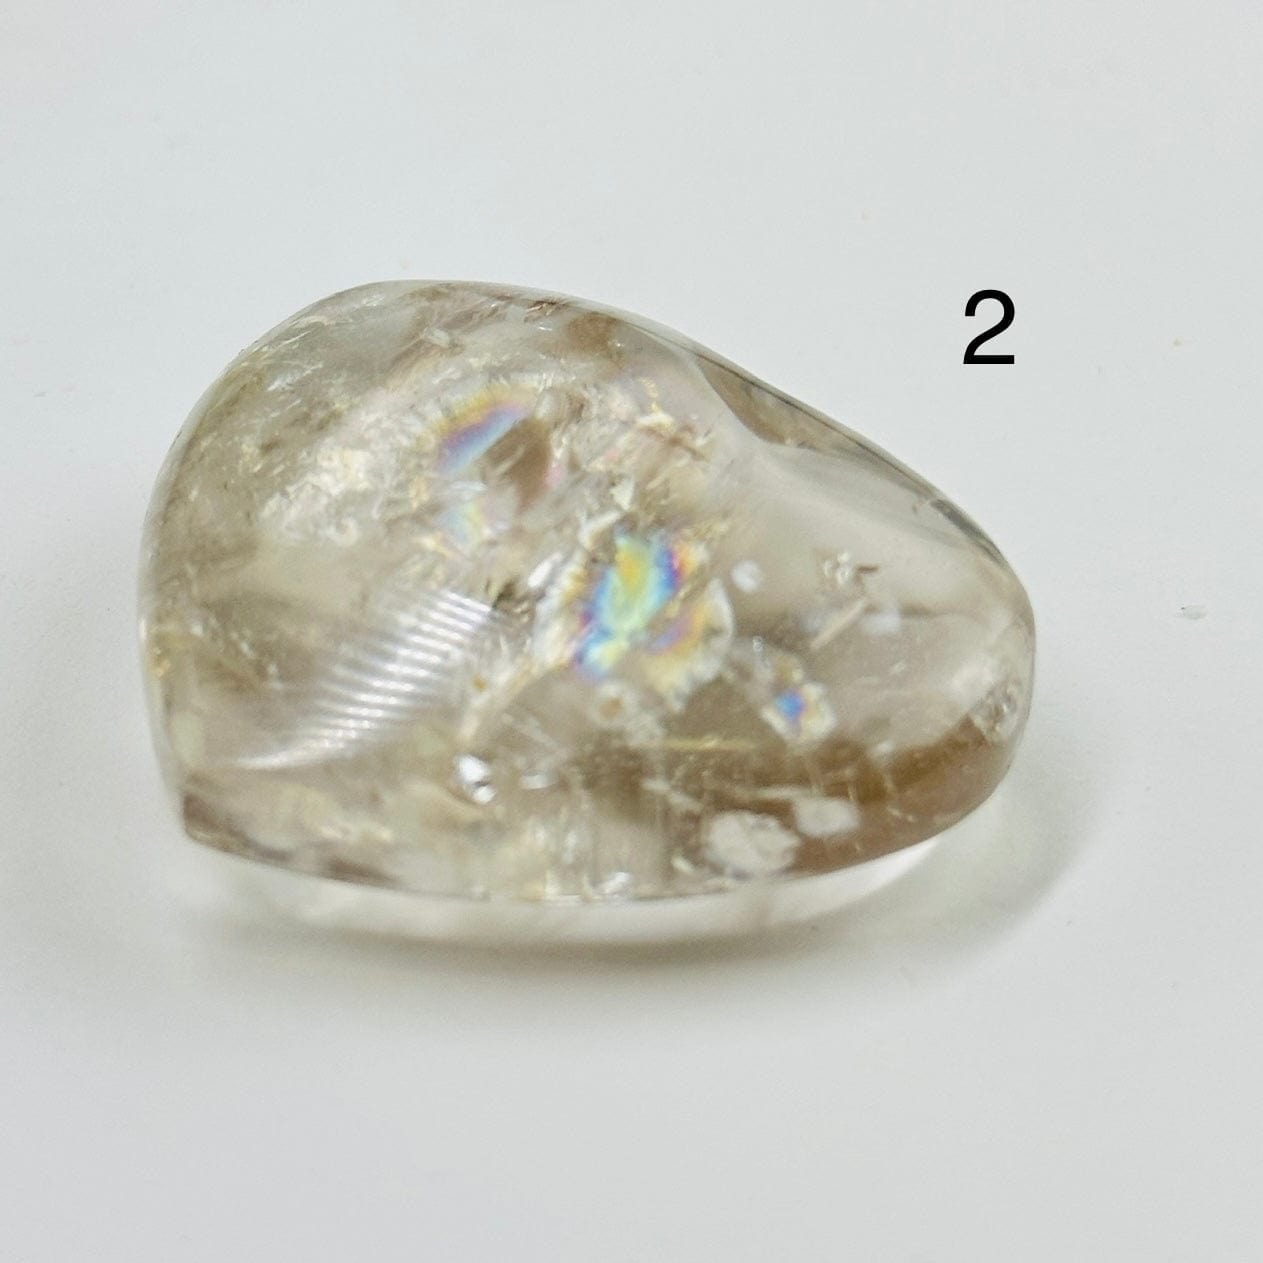 up close shot of variant 2 of crystal quartz heart showing rainbows